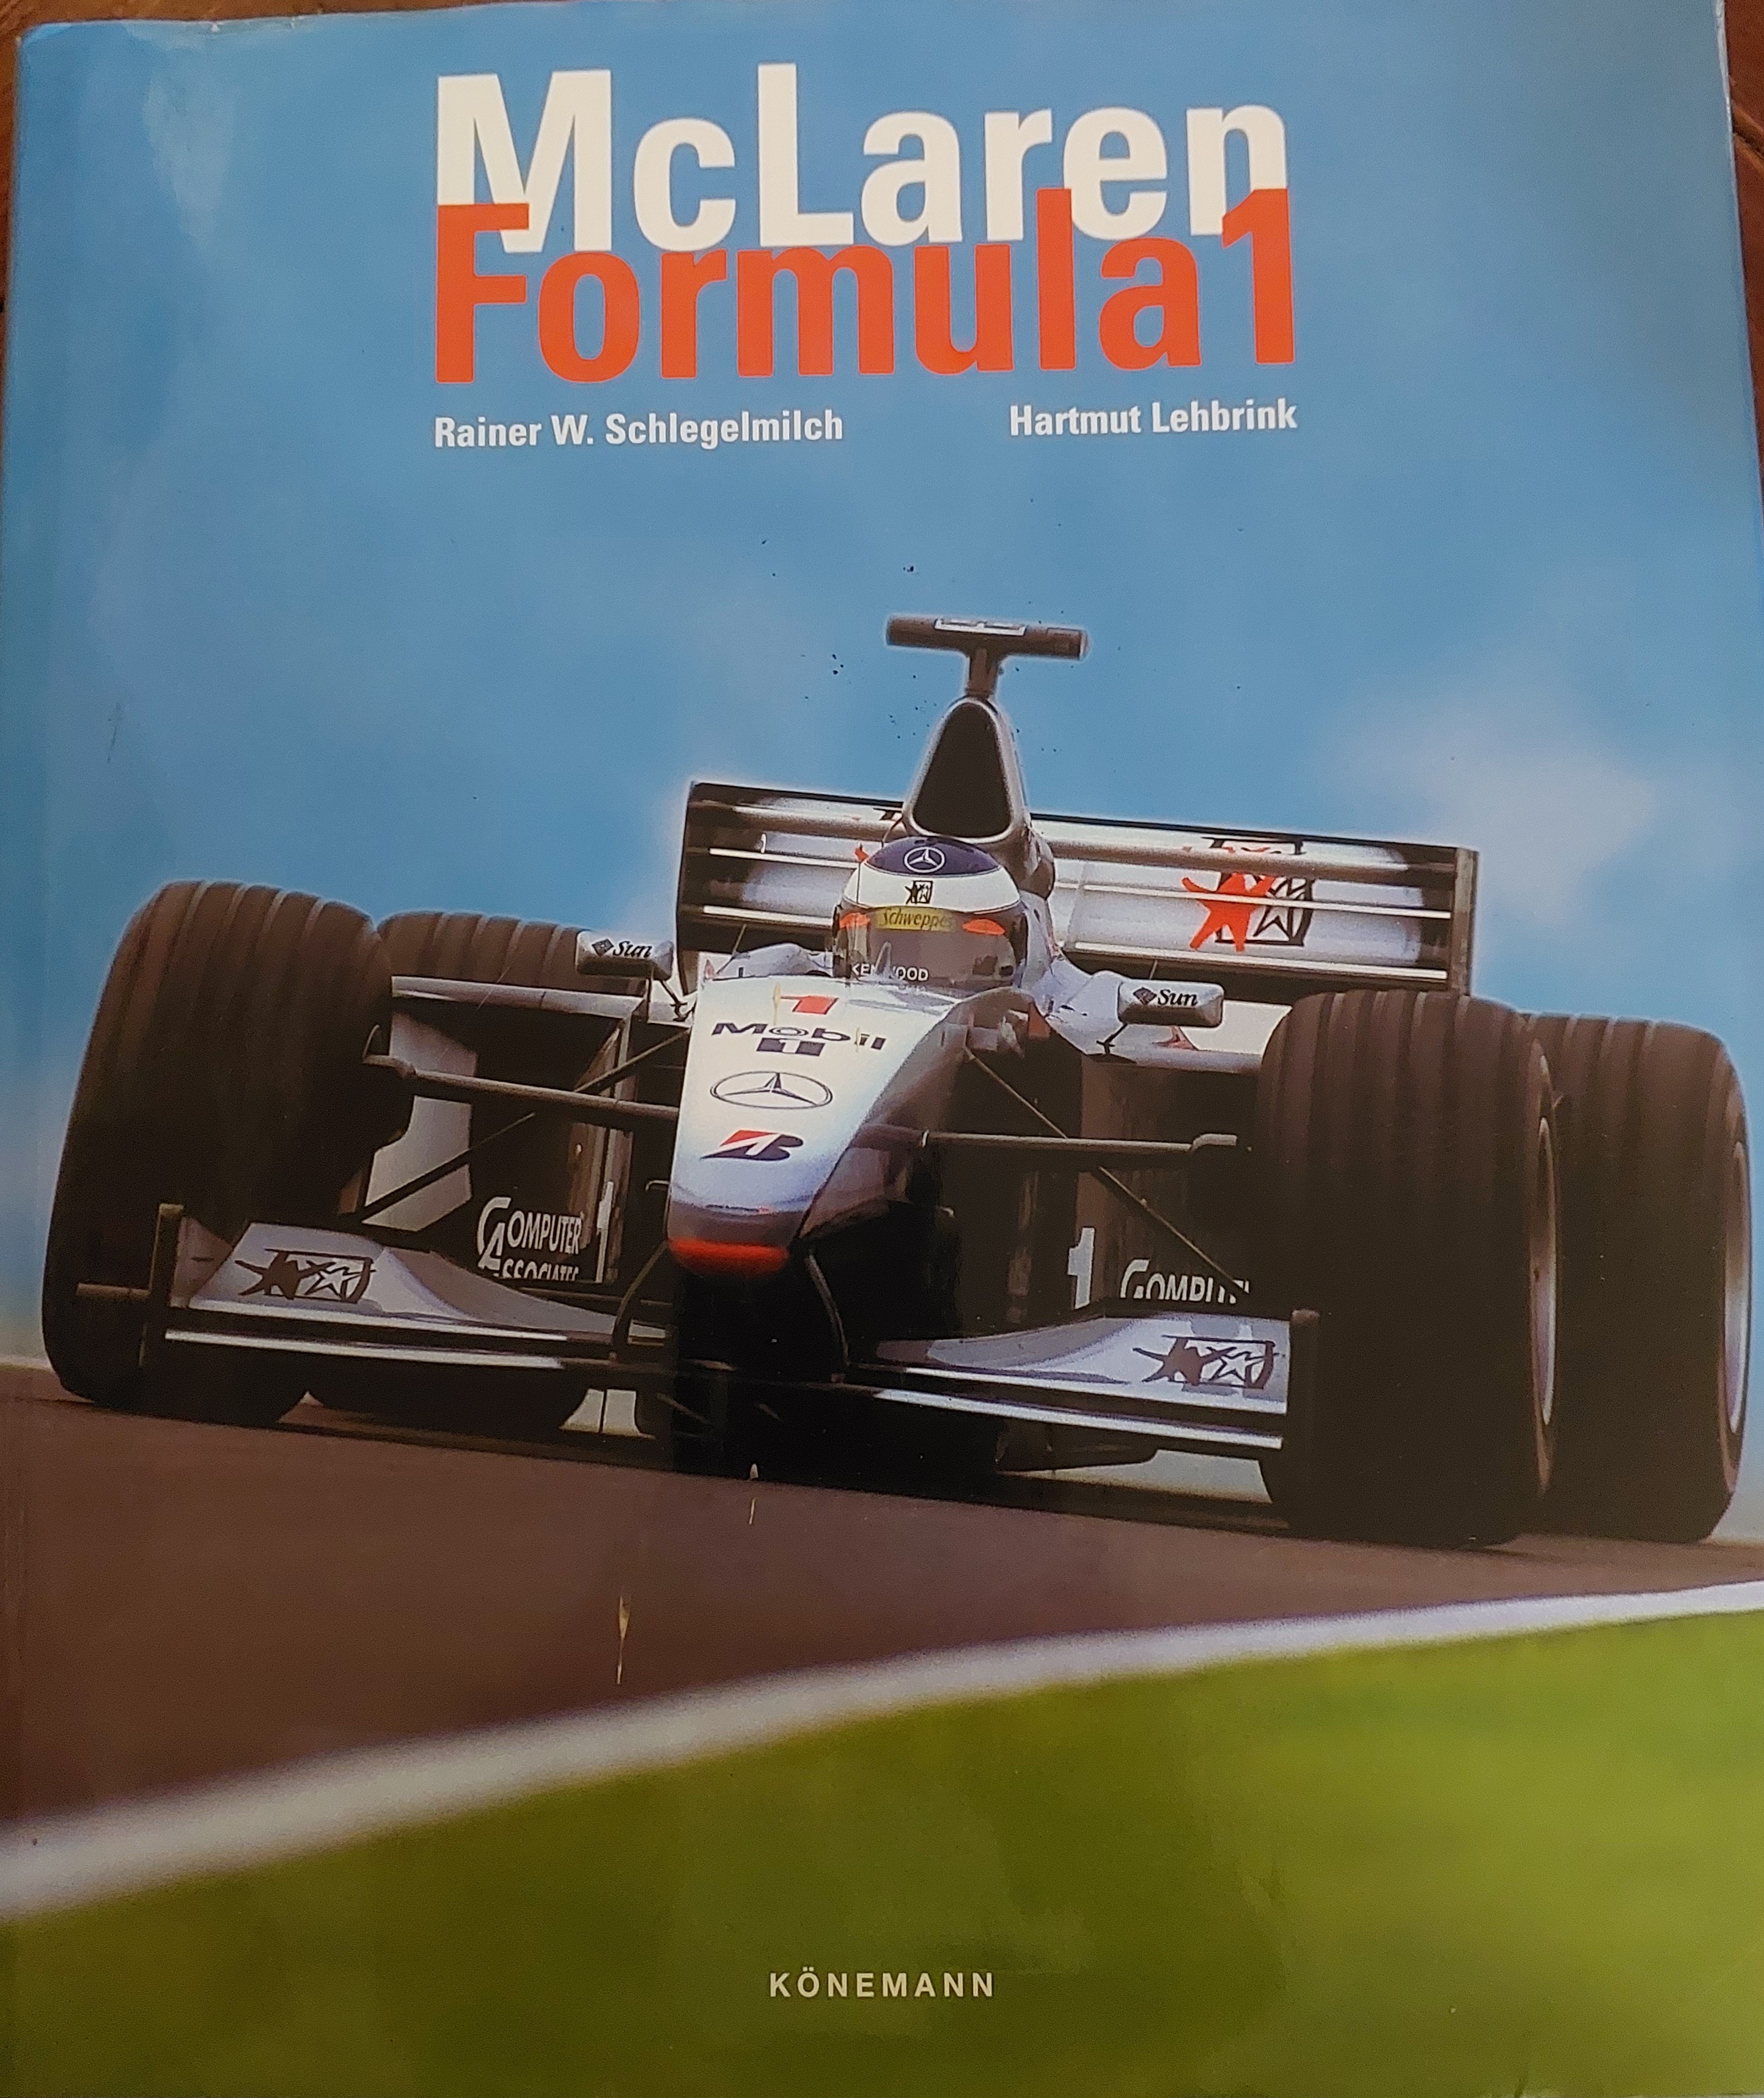 McLaren Formula 1 - Rainer W. Schlegelmilch & Hartmut Lehbrink